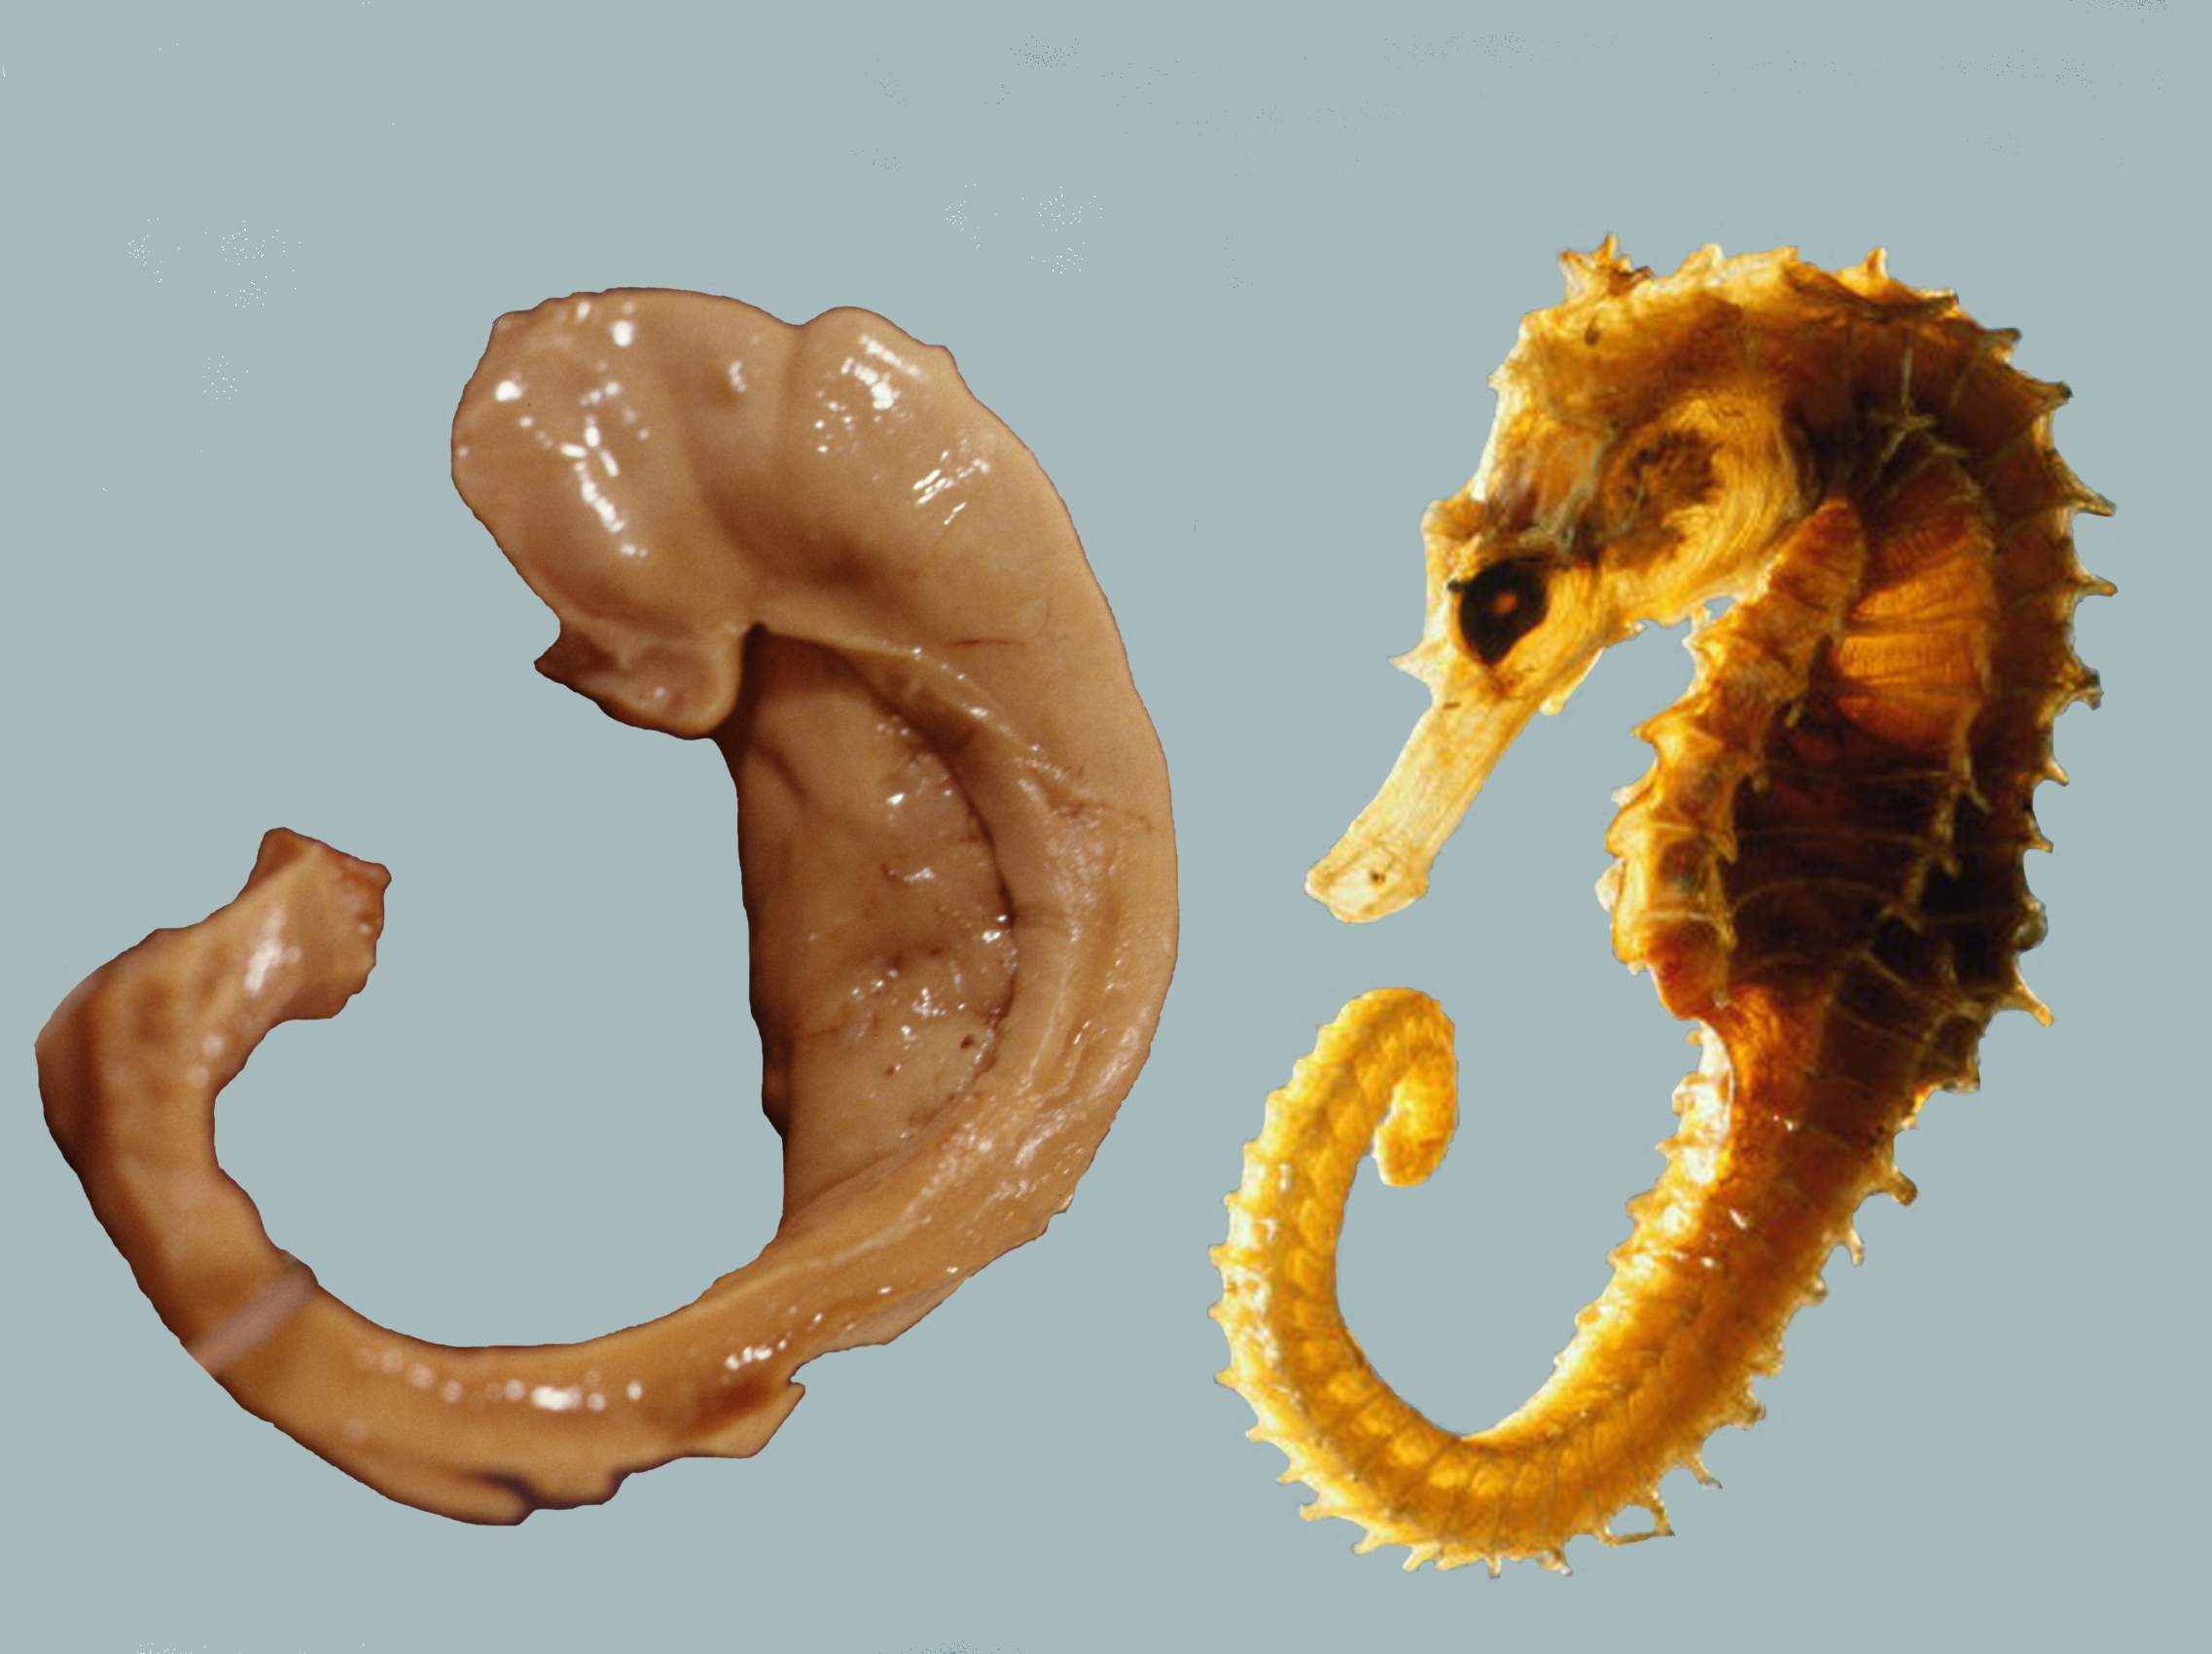 A human hippocampus alongside a sea horse.